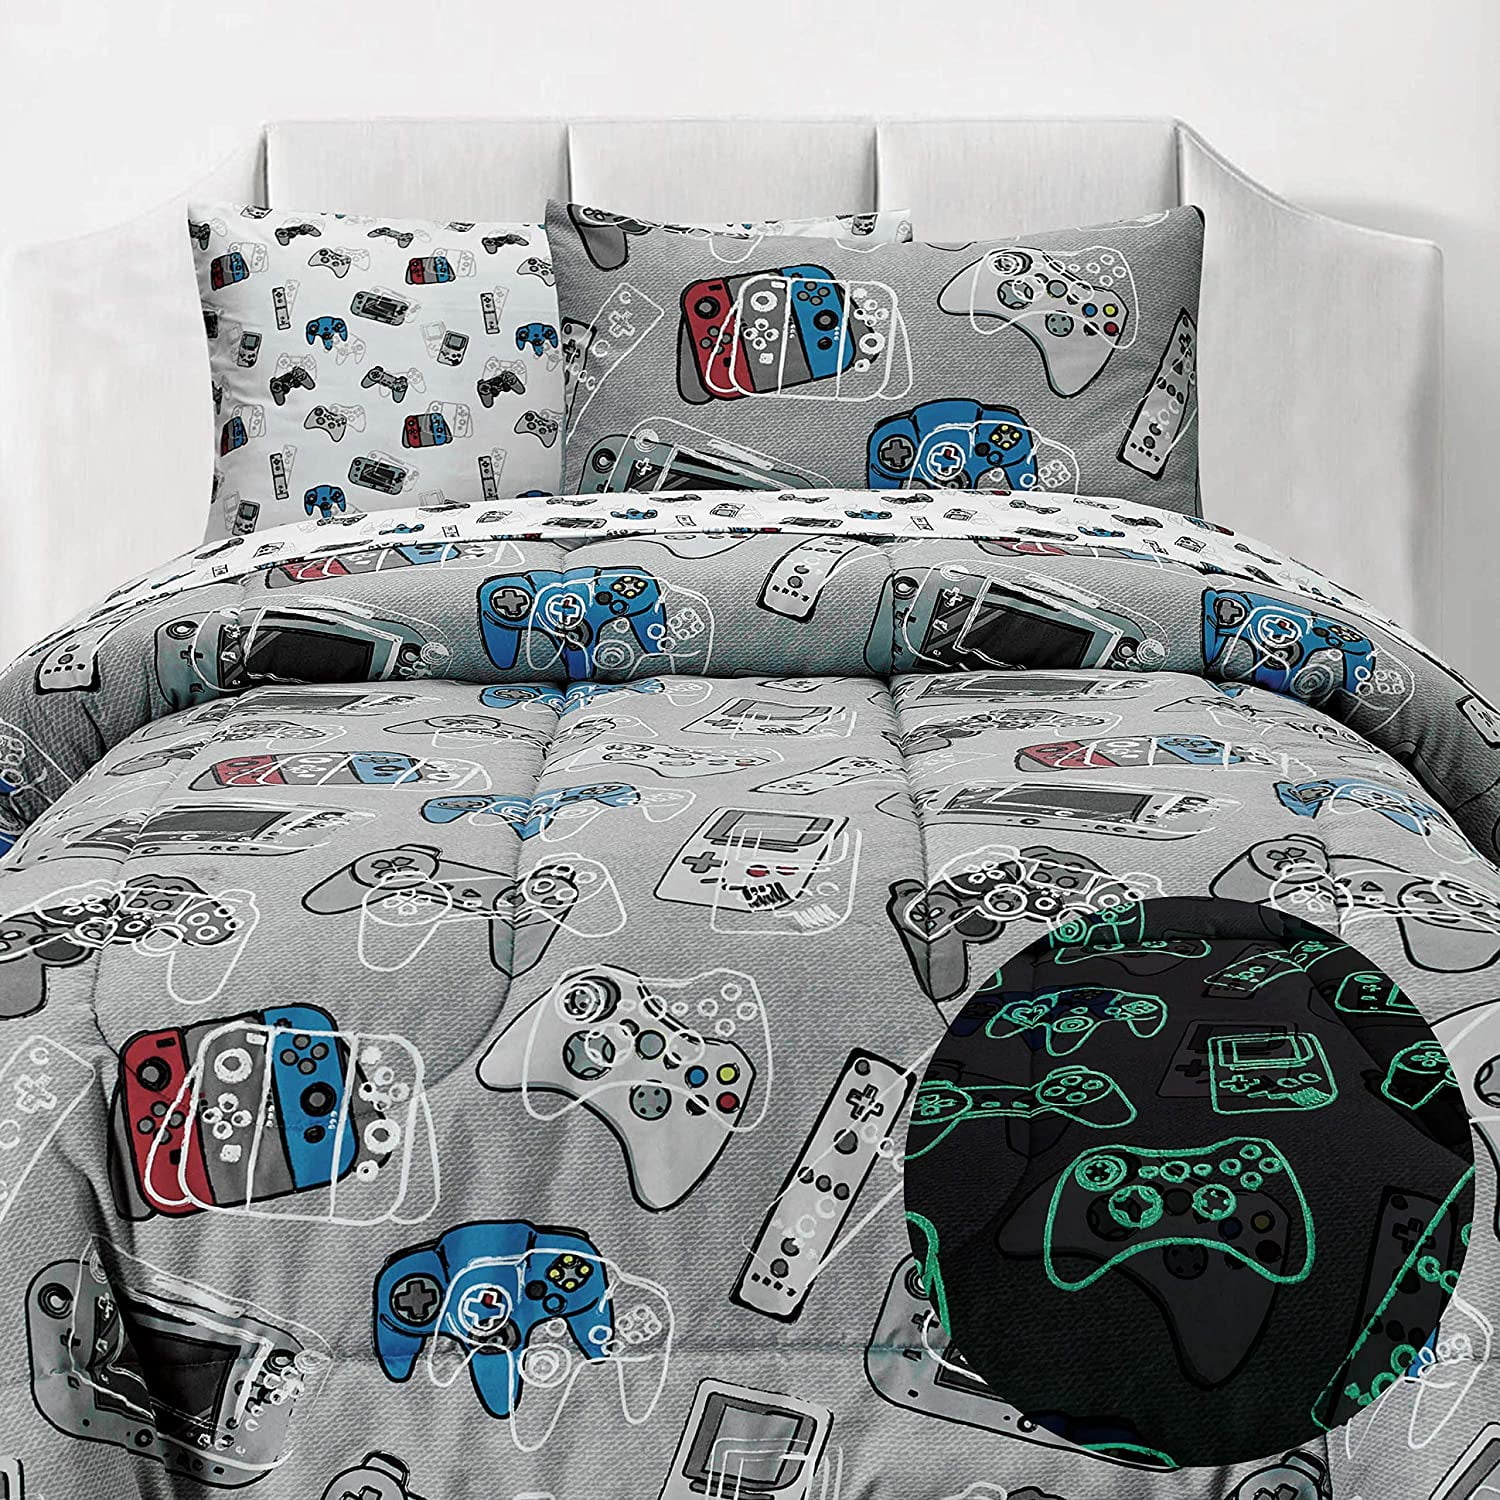  Comforter Set King Size, Gaming Gamer Retro Cute Soft